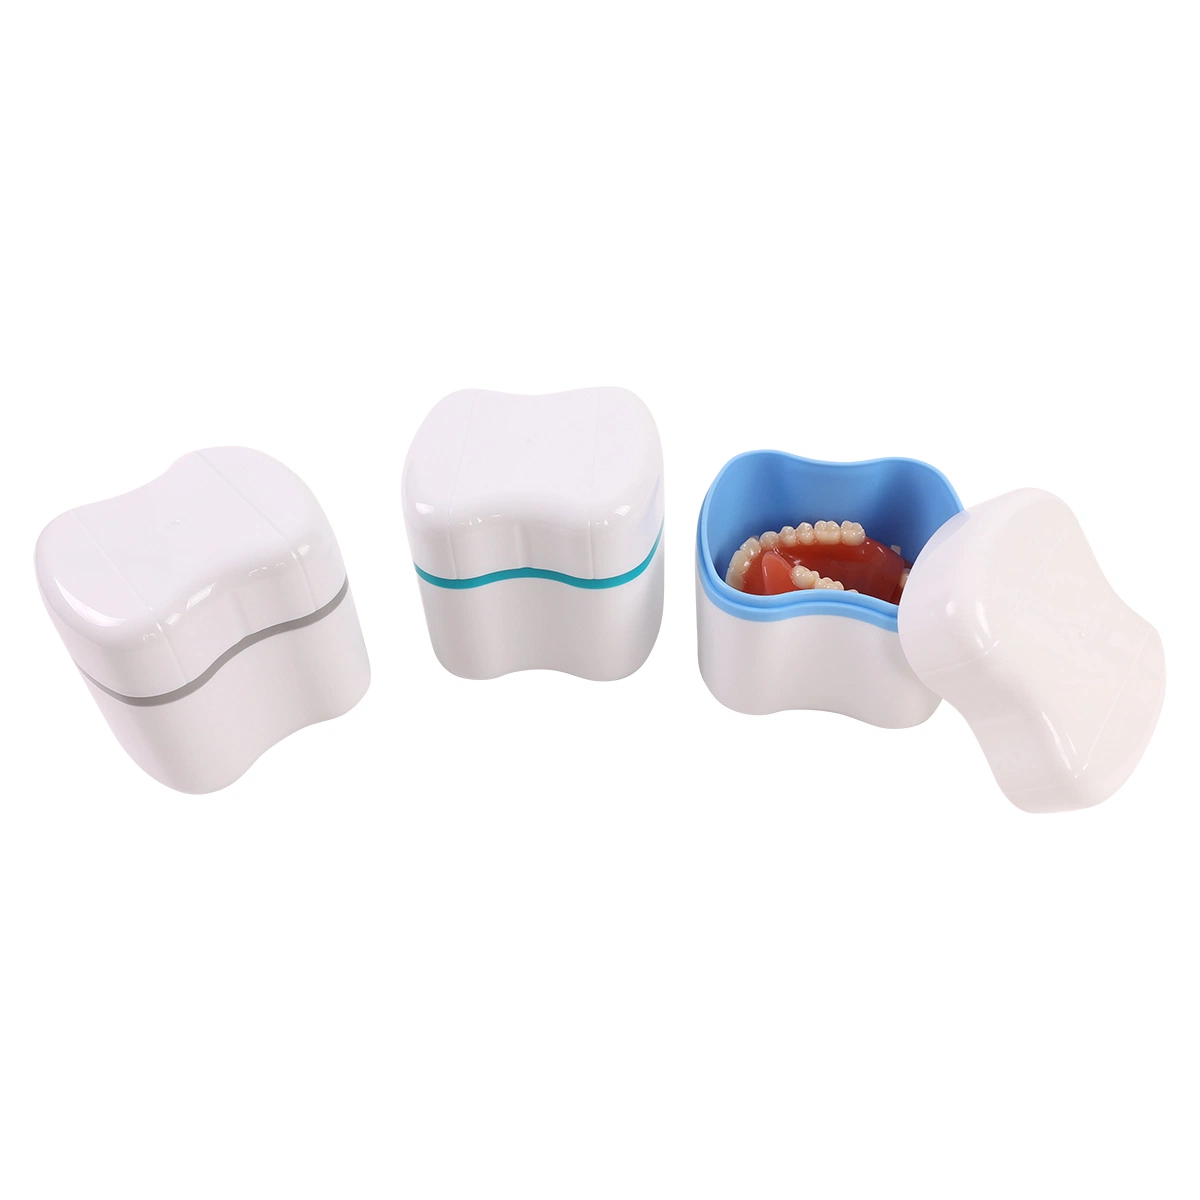 Denture Organizer Dental False Teeth Storage Box Cleaning Teeth Cases